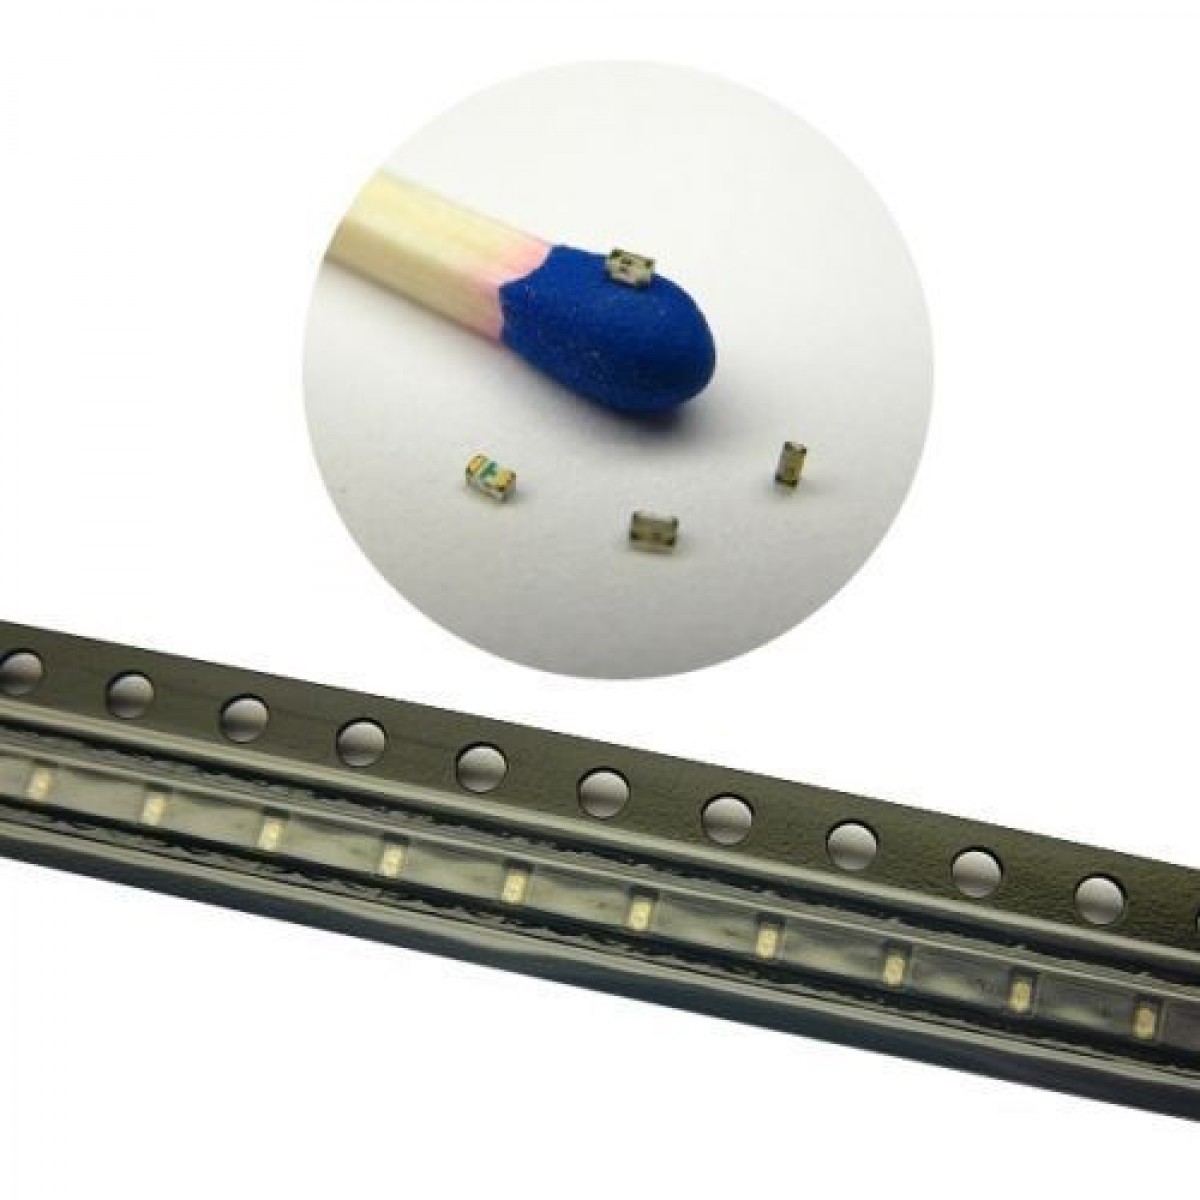  30 pcs Warm White #0402 SMD LEDs Lighting Kits SMT Micro LEDs Super Bright (WeHonest)